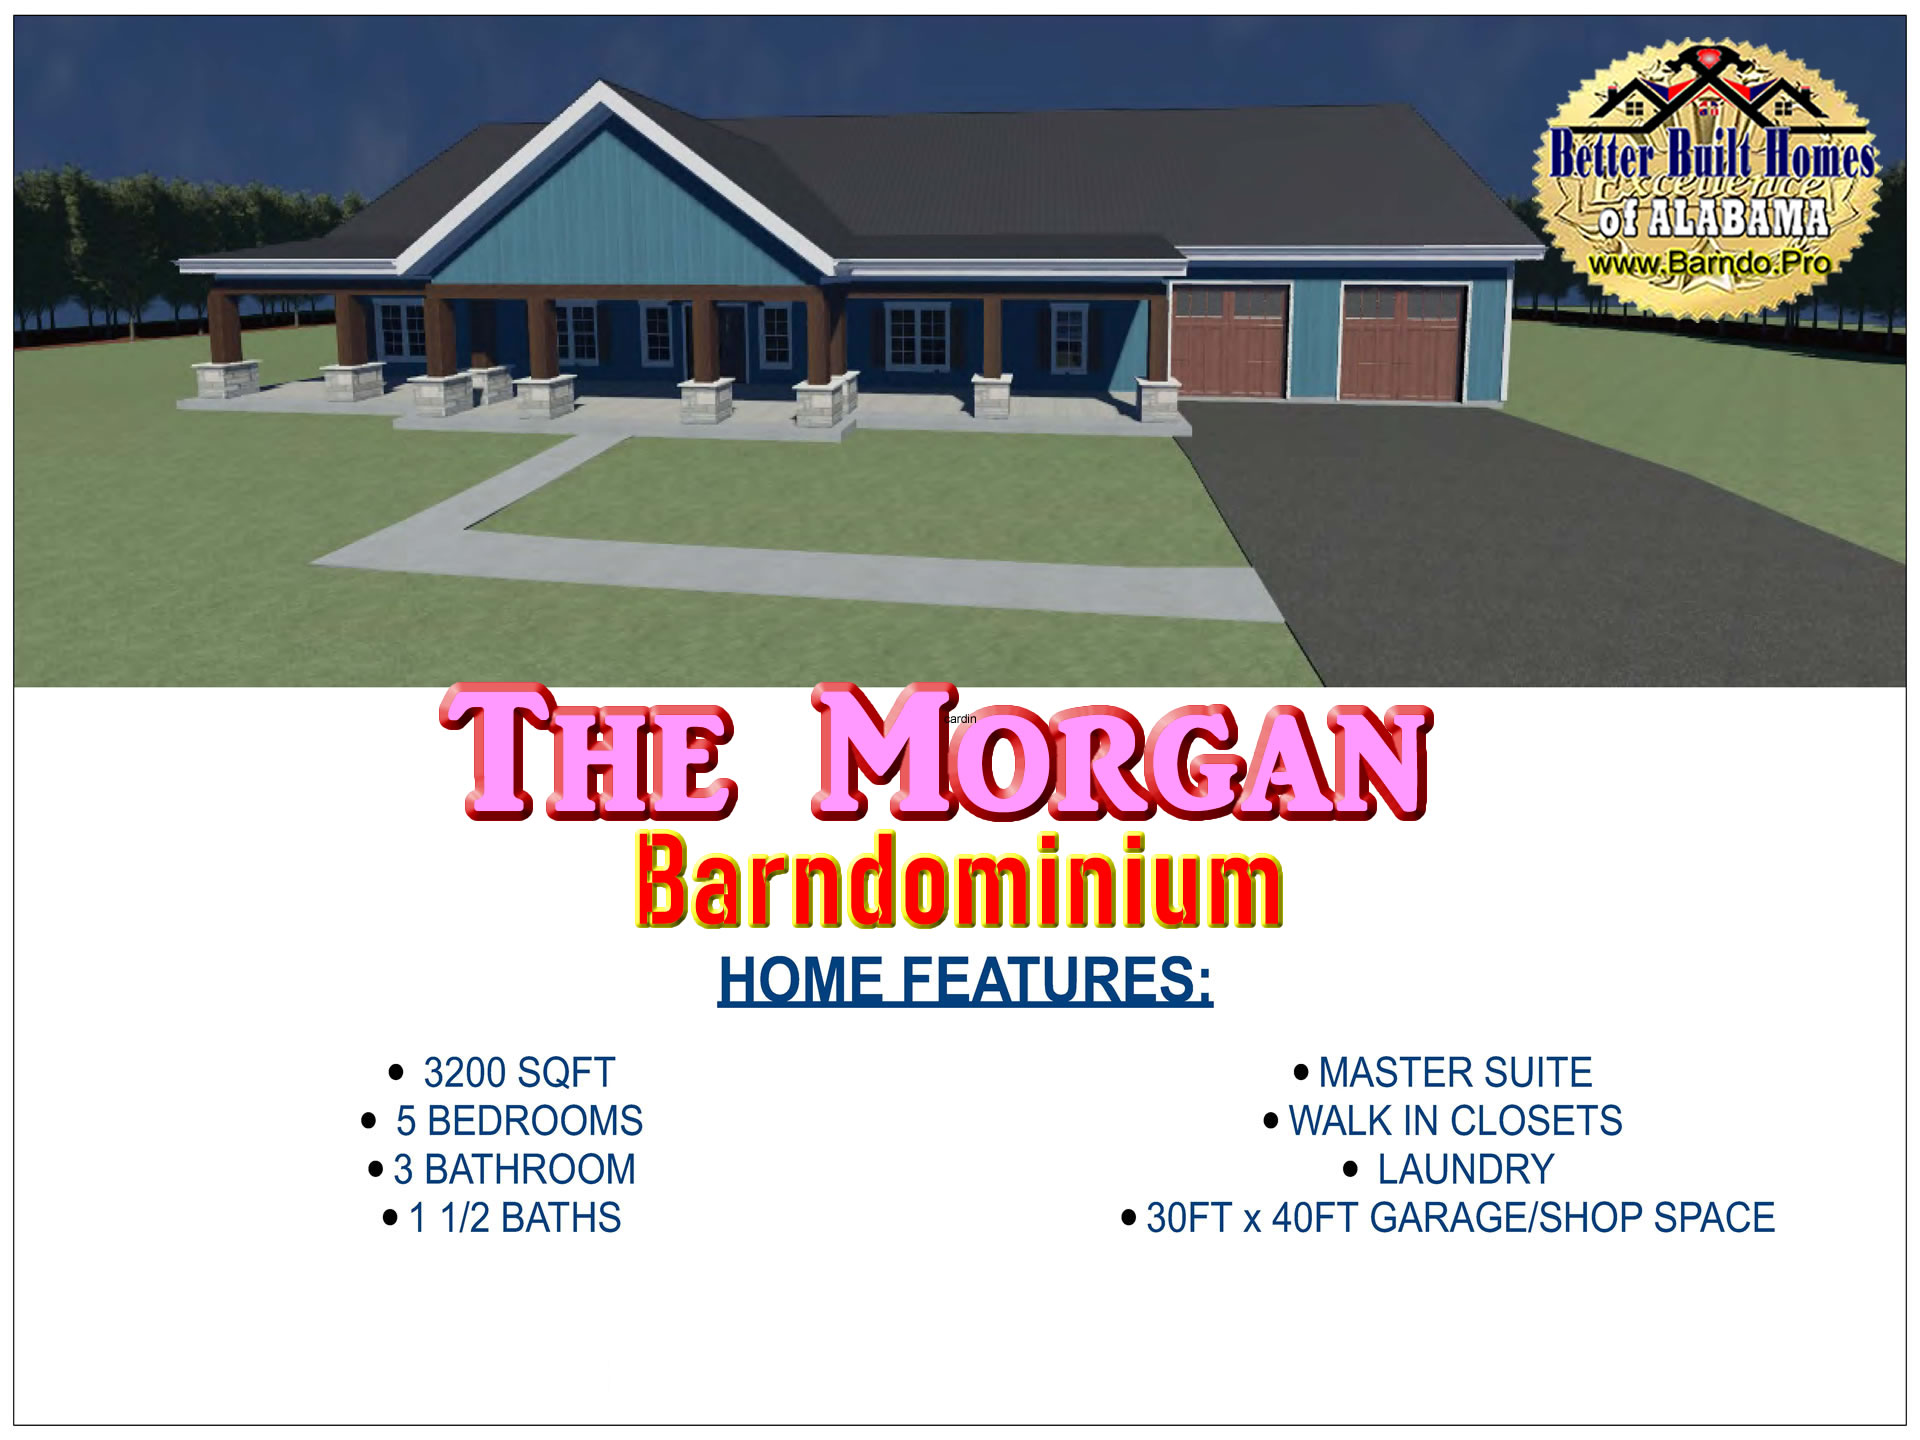 The Morgan Barndominium Home Features Built By BETTER BUILT HOMES of ALABAMA Barndo Professionals